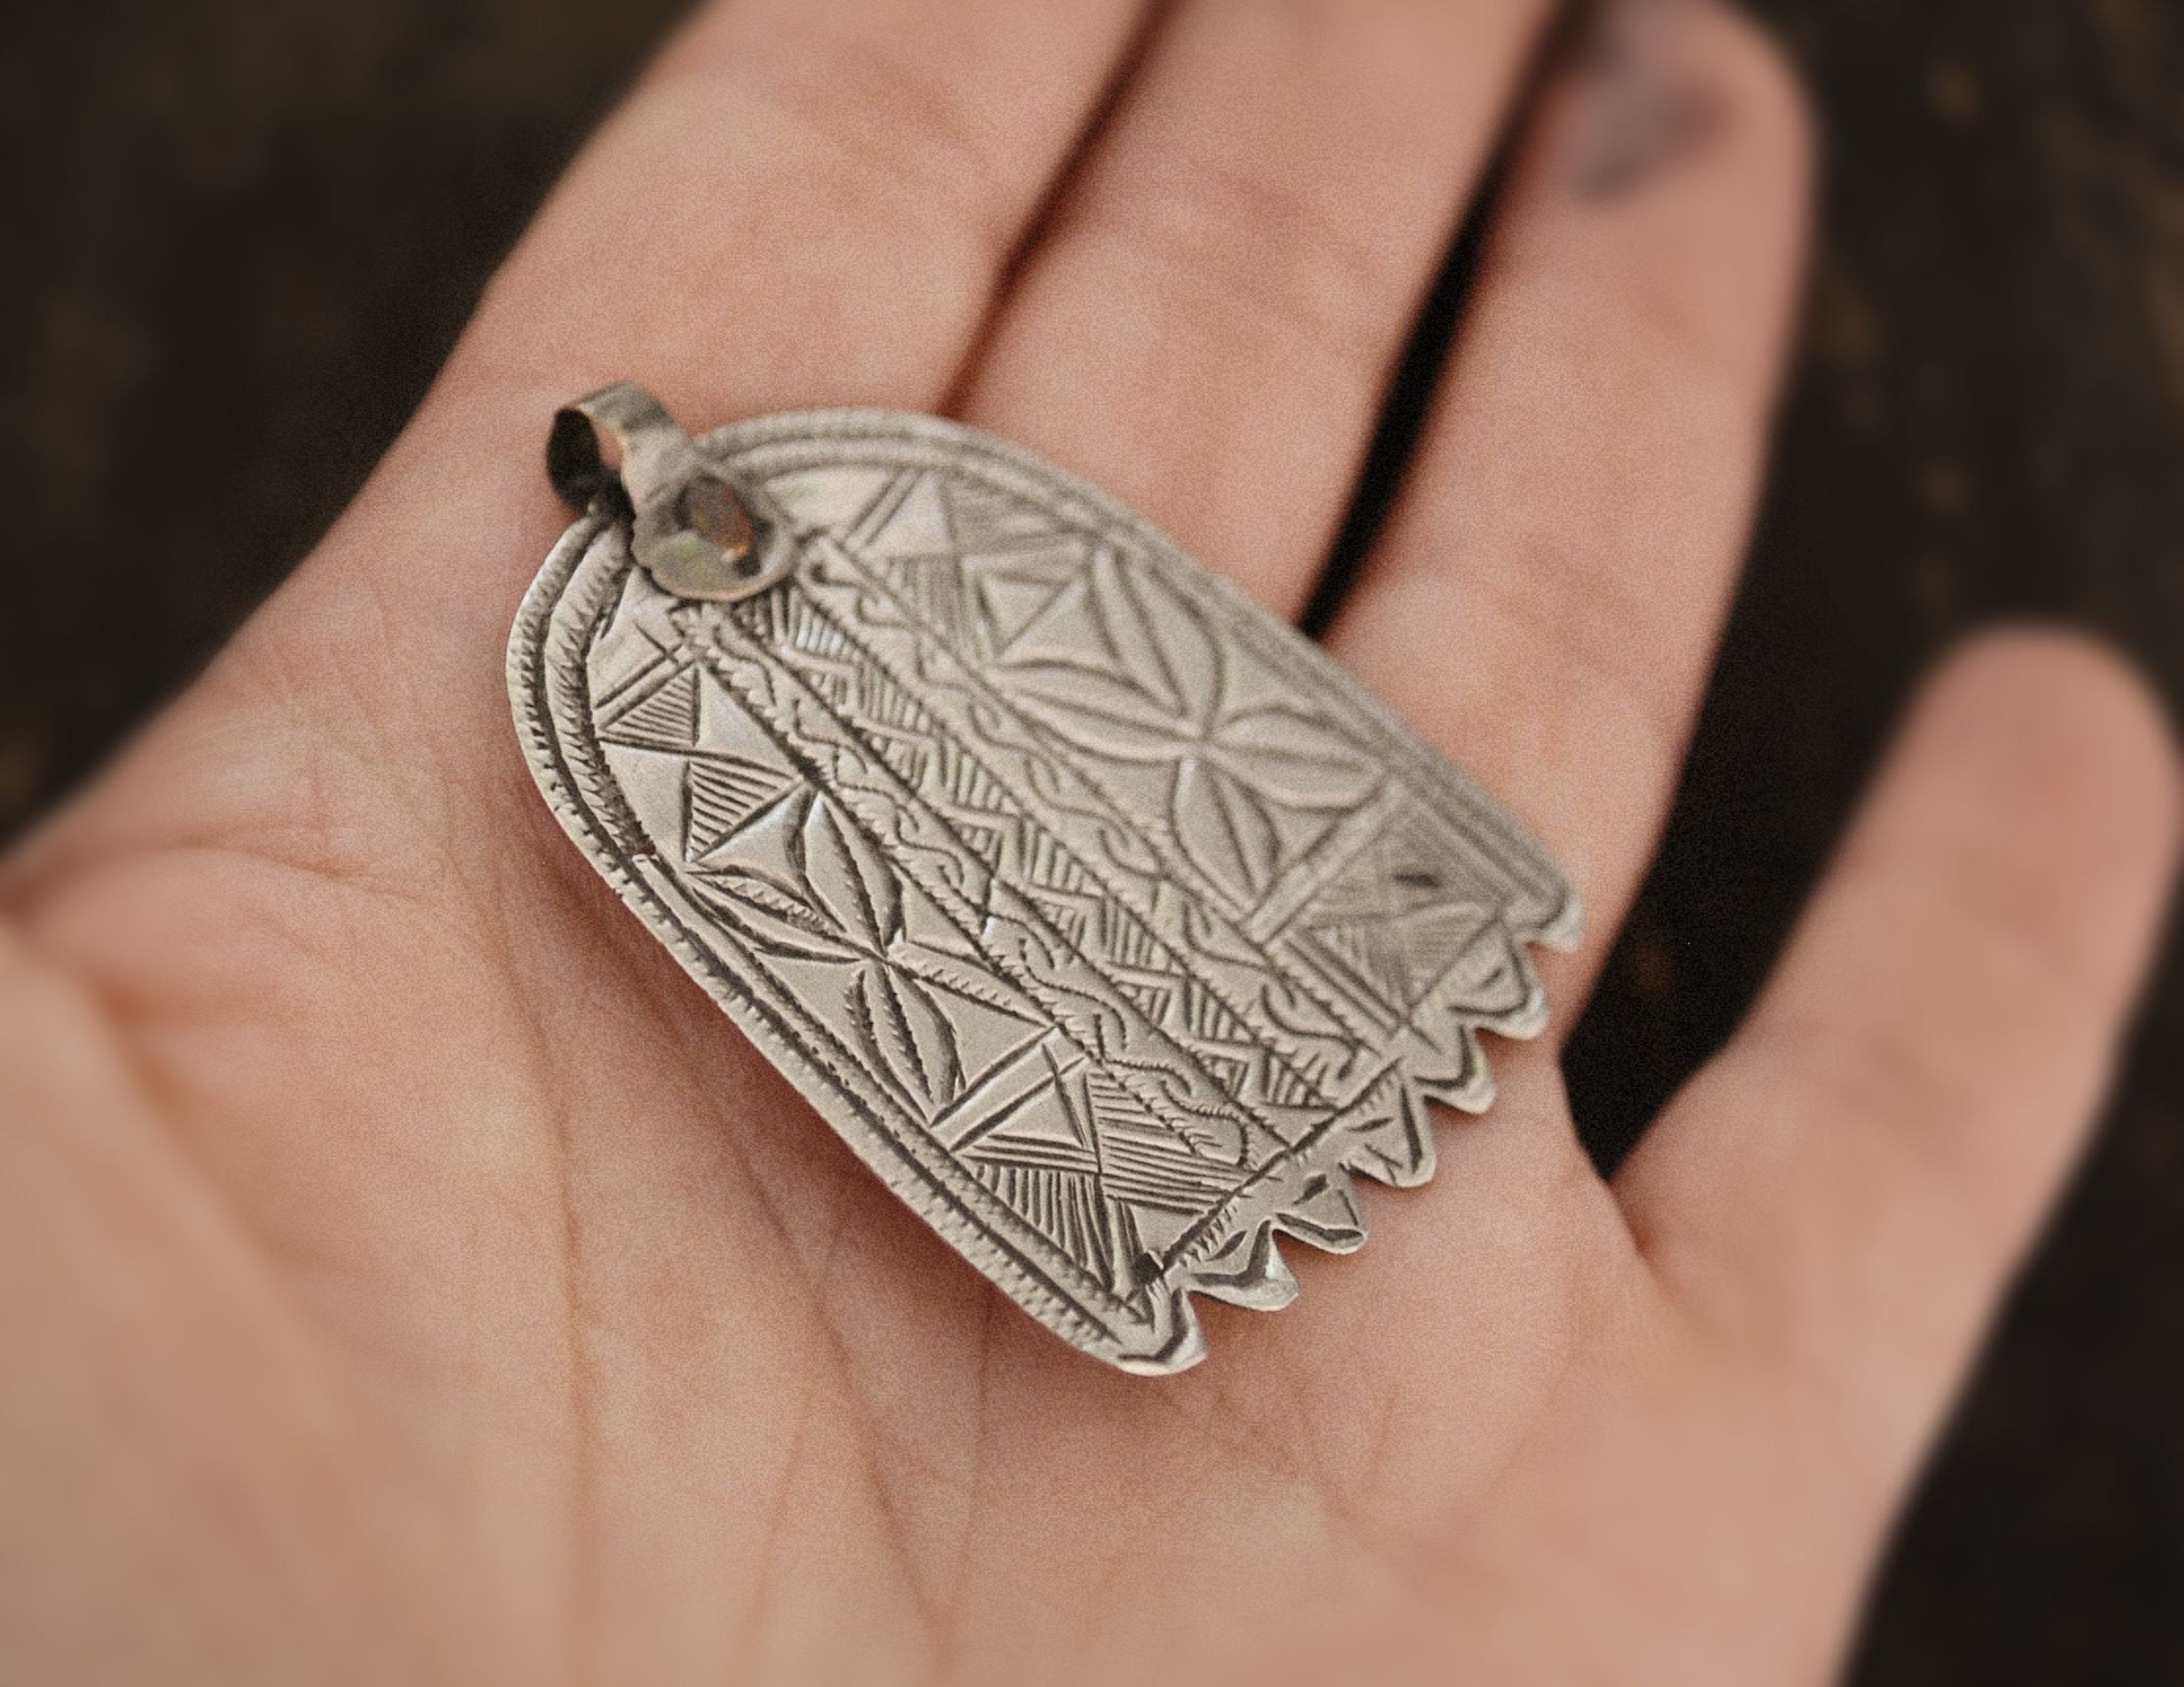 Moroccan Hamsa Pendant - Hand of Fatima Pendant Amulet